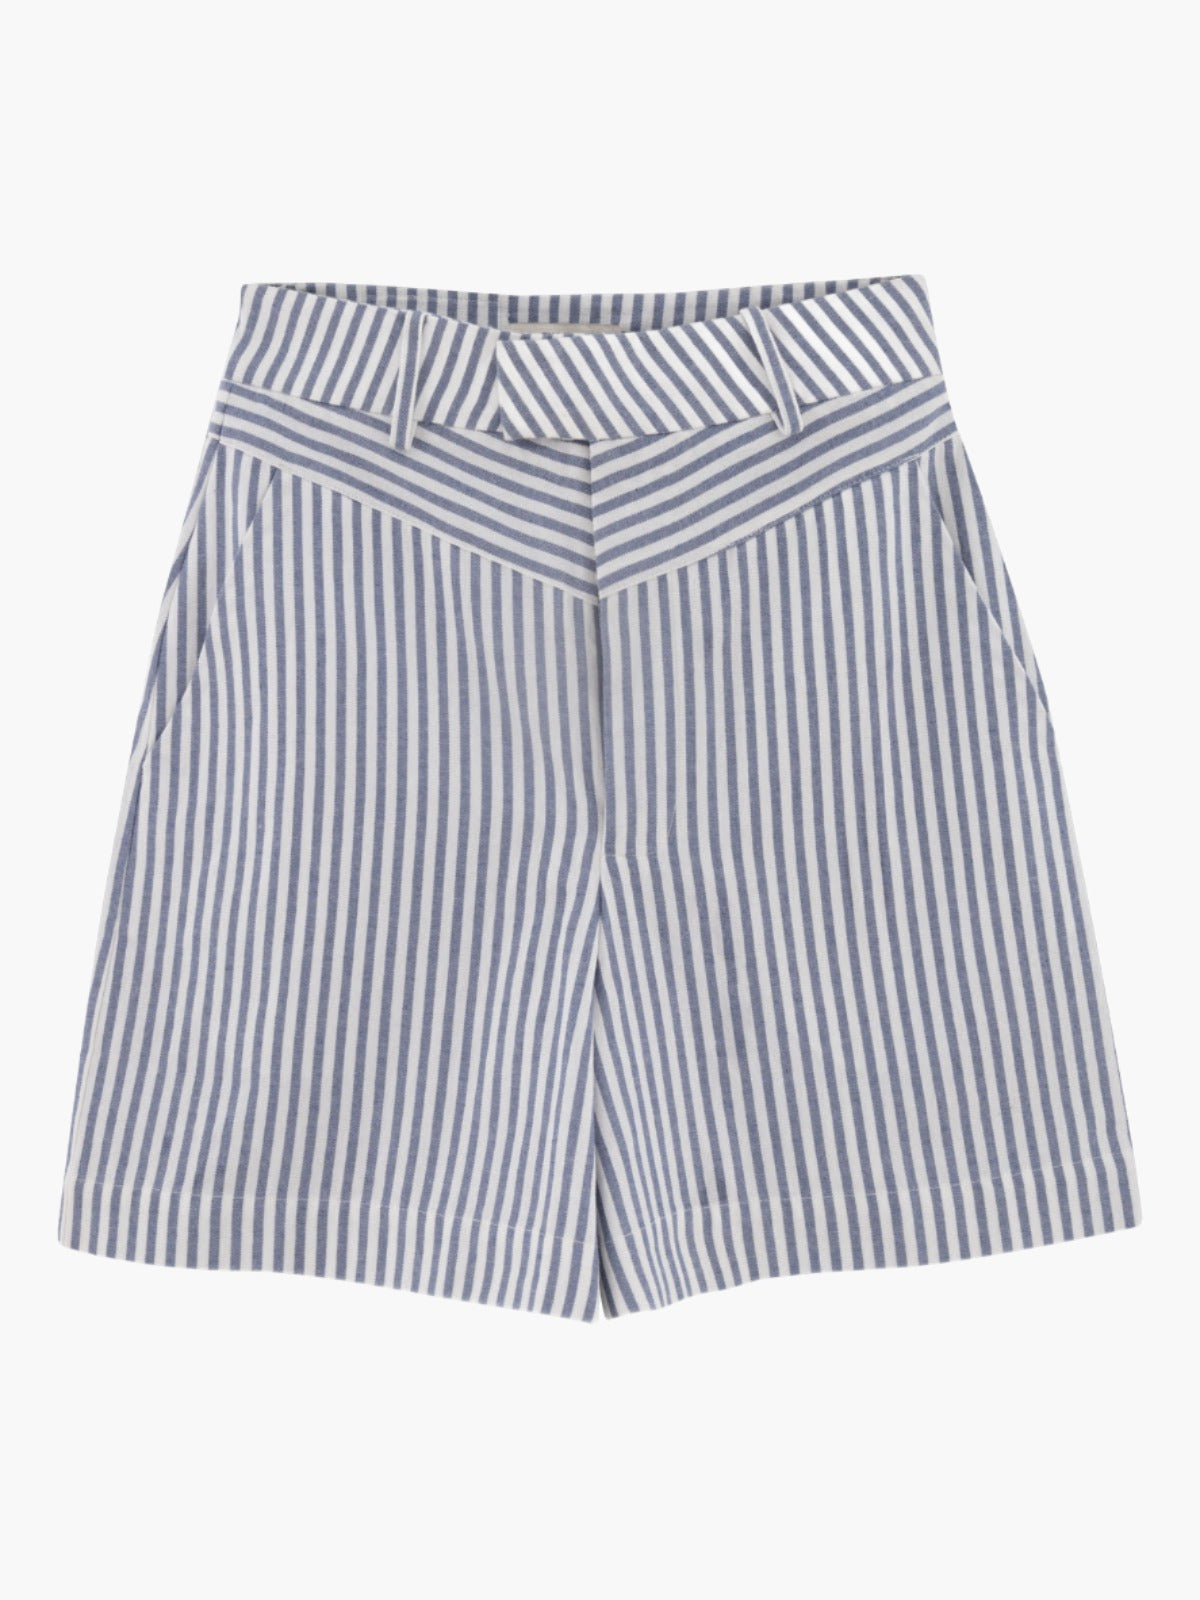 Navy Striped Bermuda Shorts